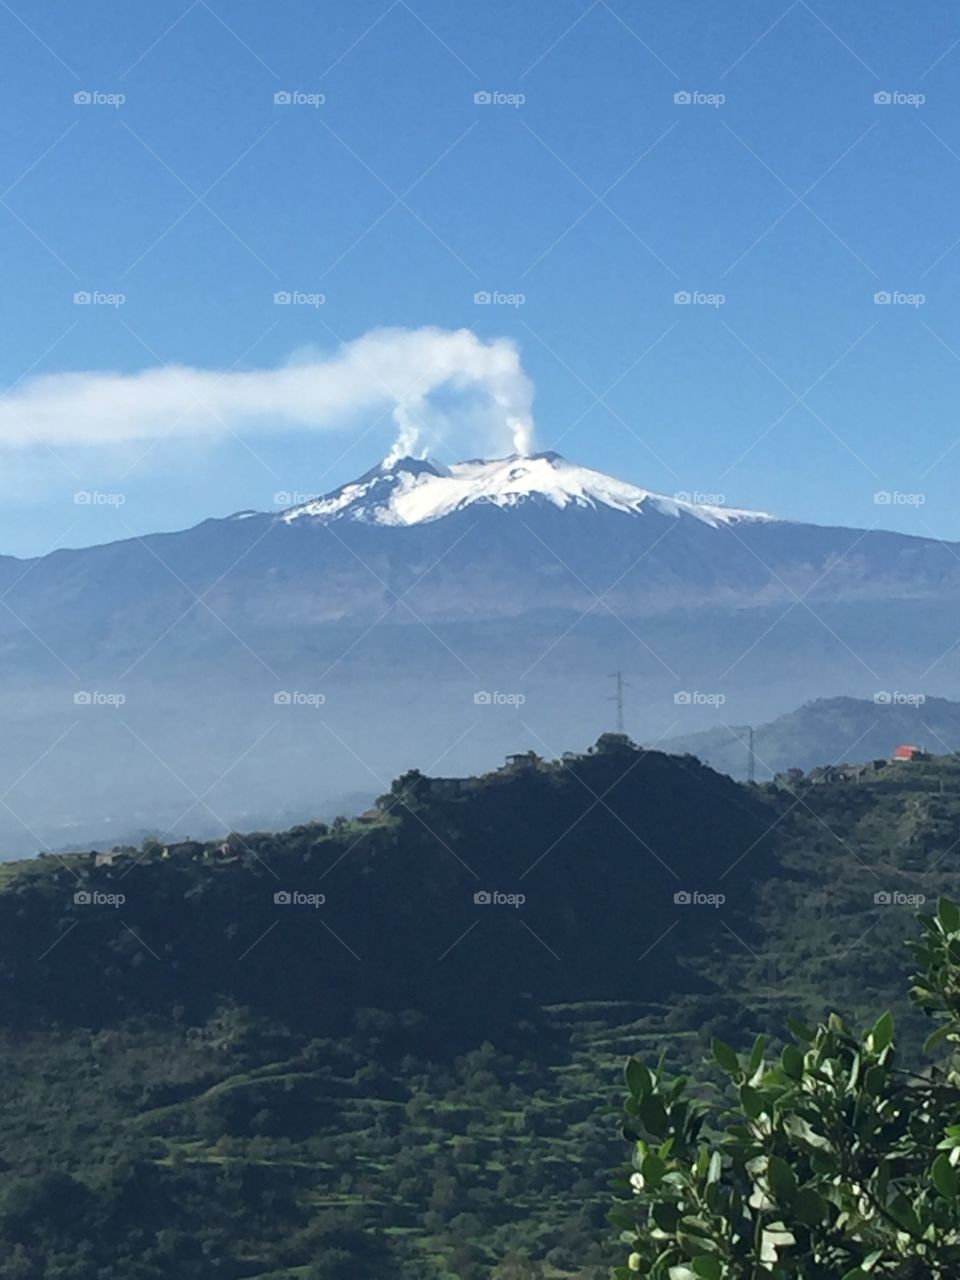 Etna is smoking. Always fire underneath